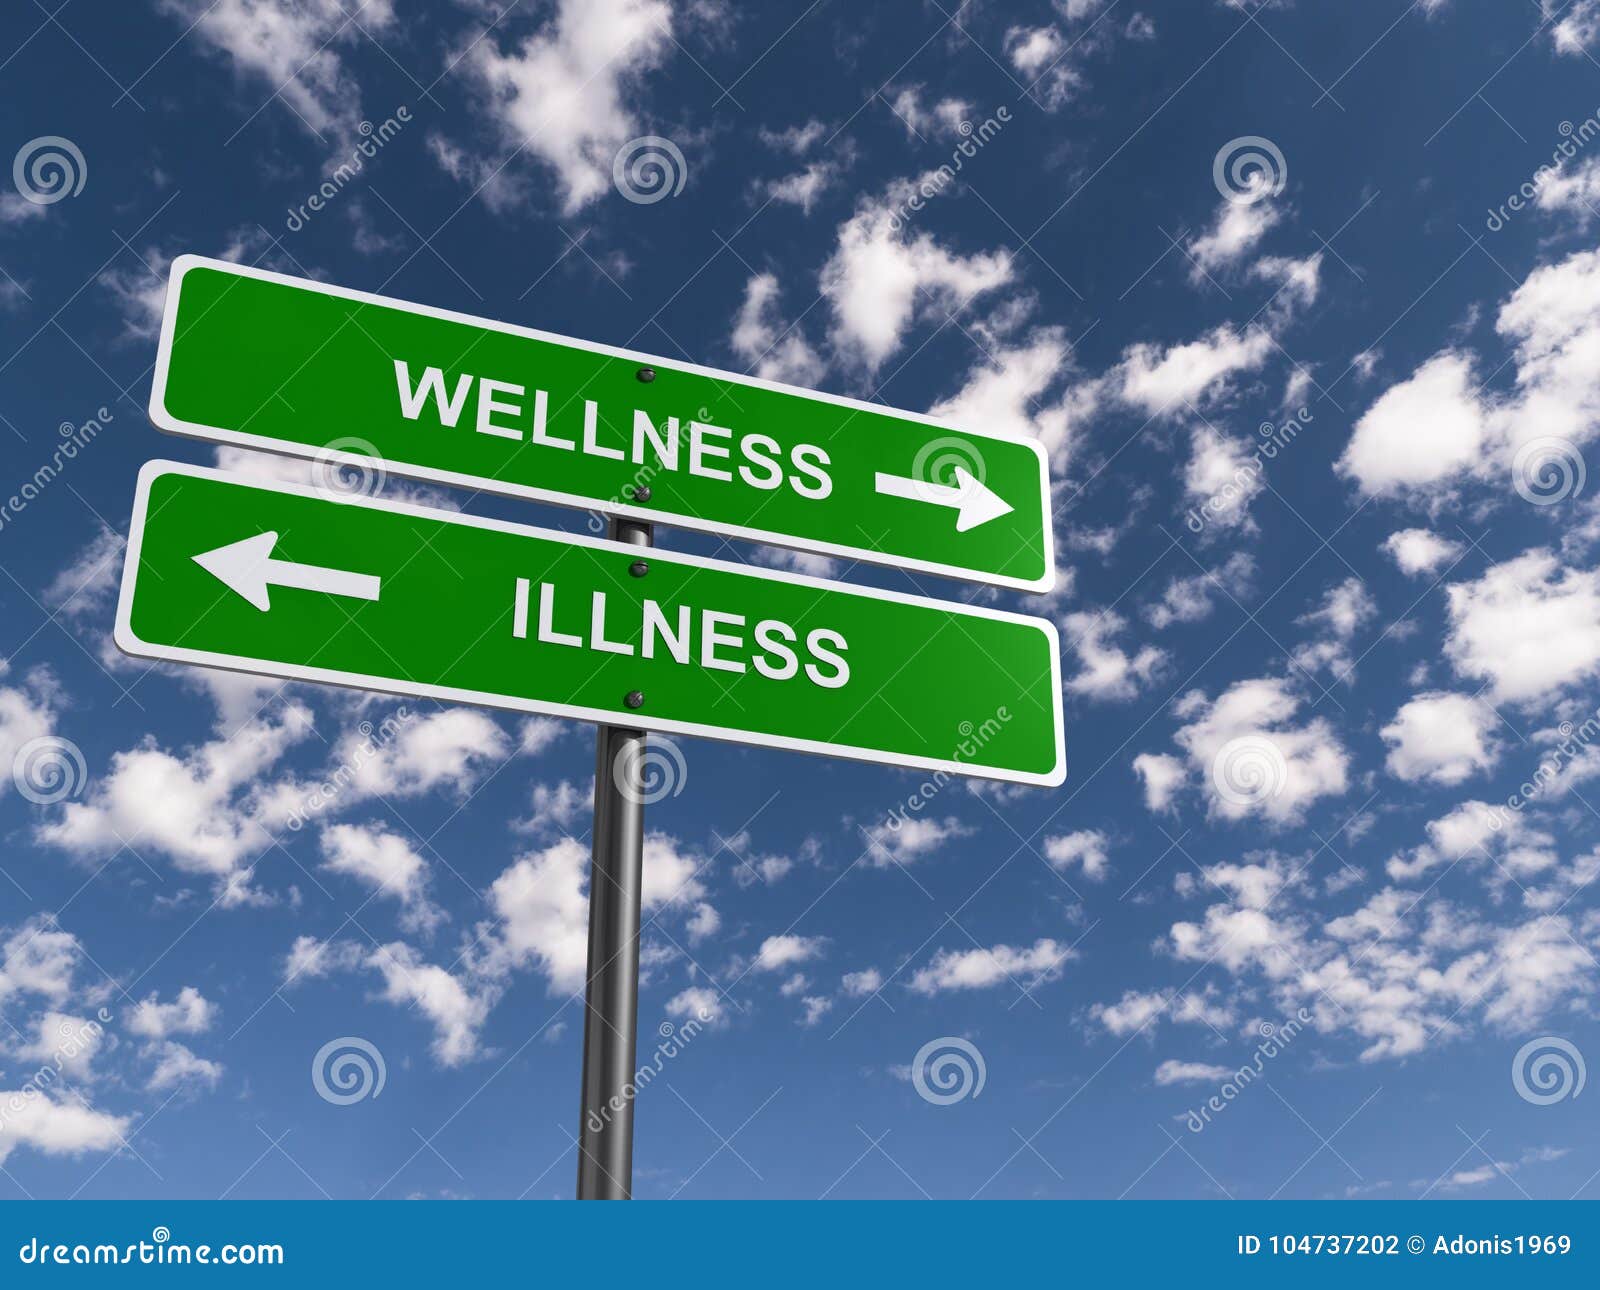 wellness or illness